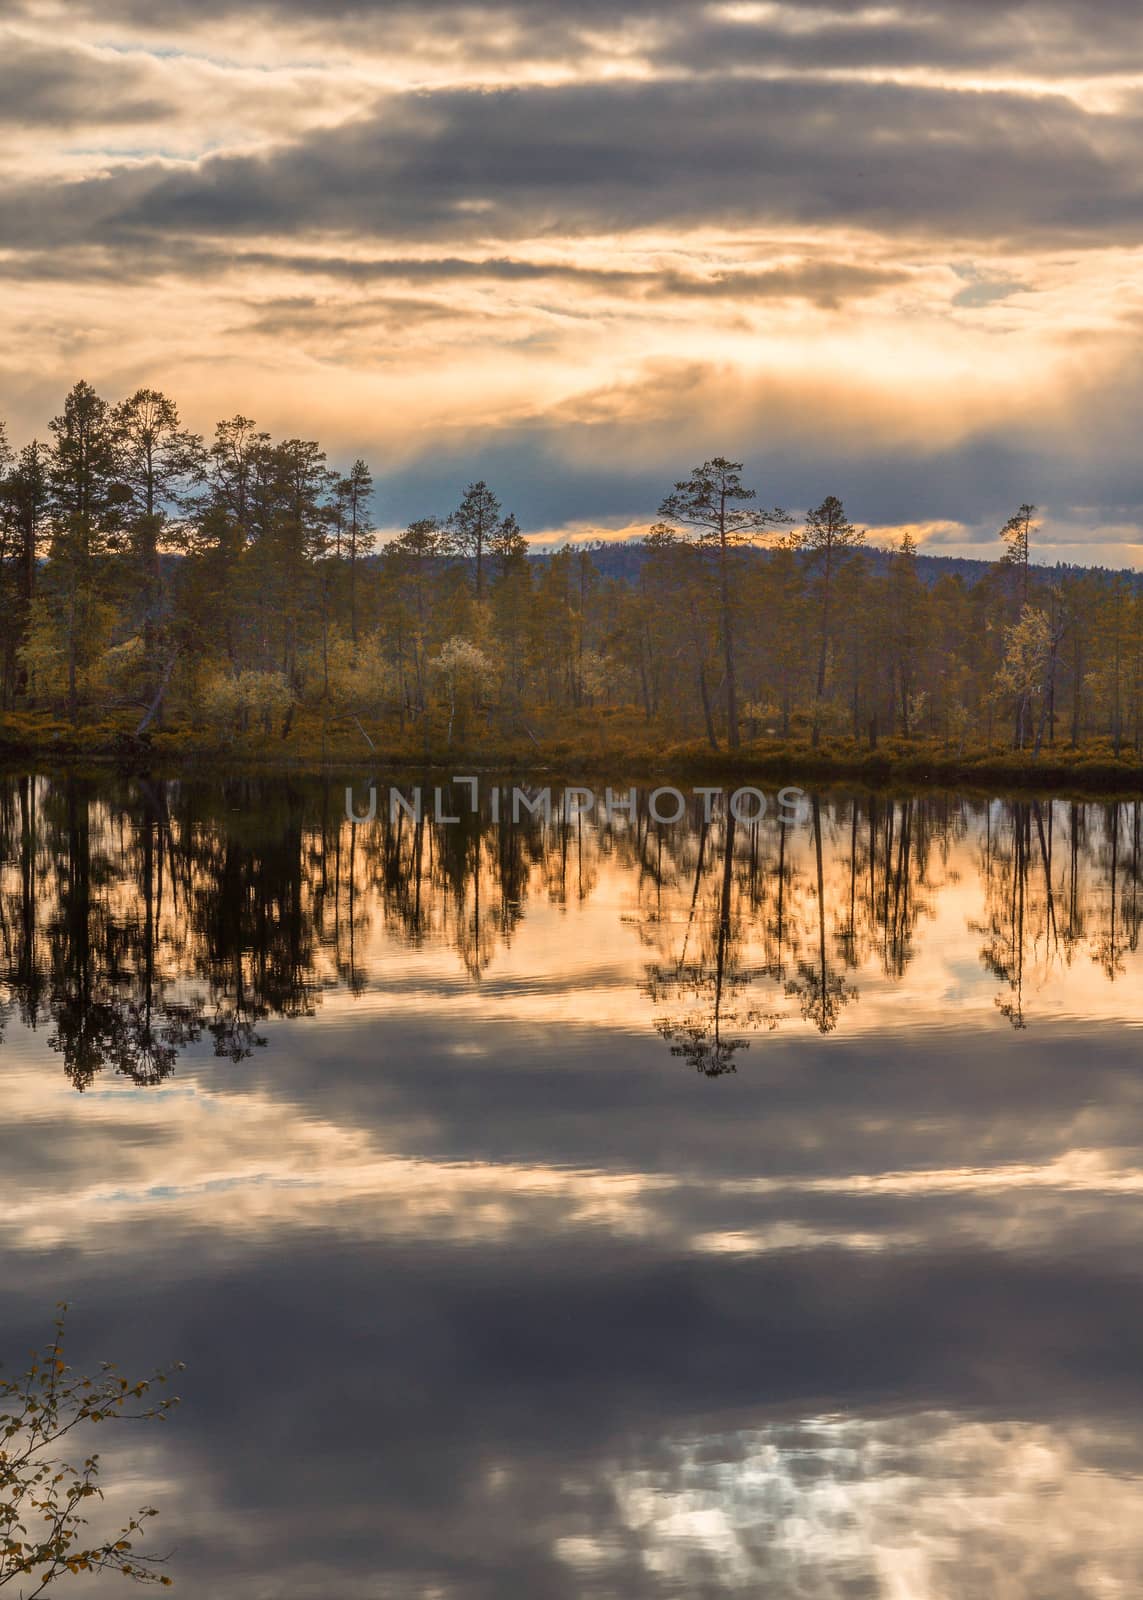 Summer solstice skies in Lapland. by Claudine